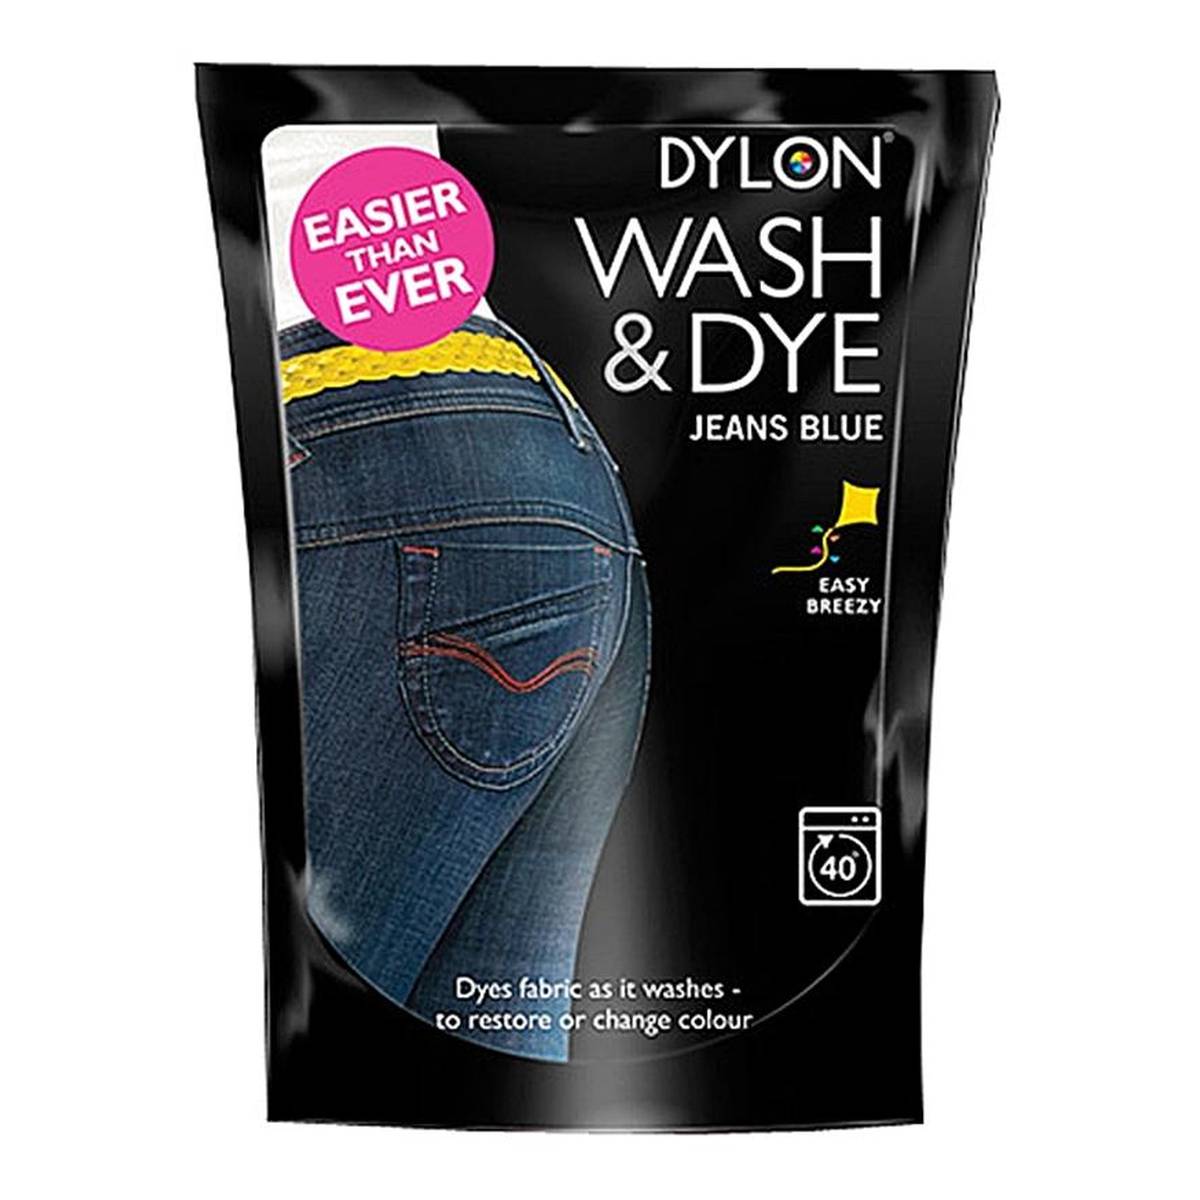 Dylon Jeans Blue Wash and Dye 400g | Hobbycraft